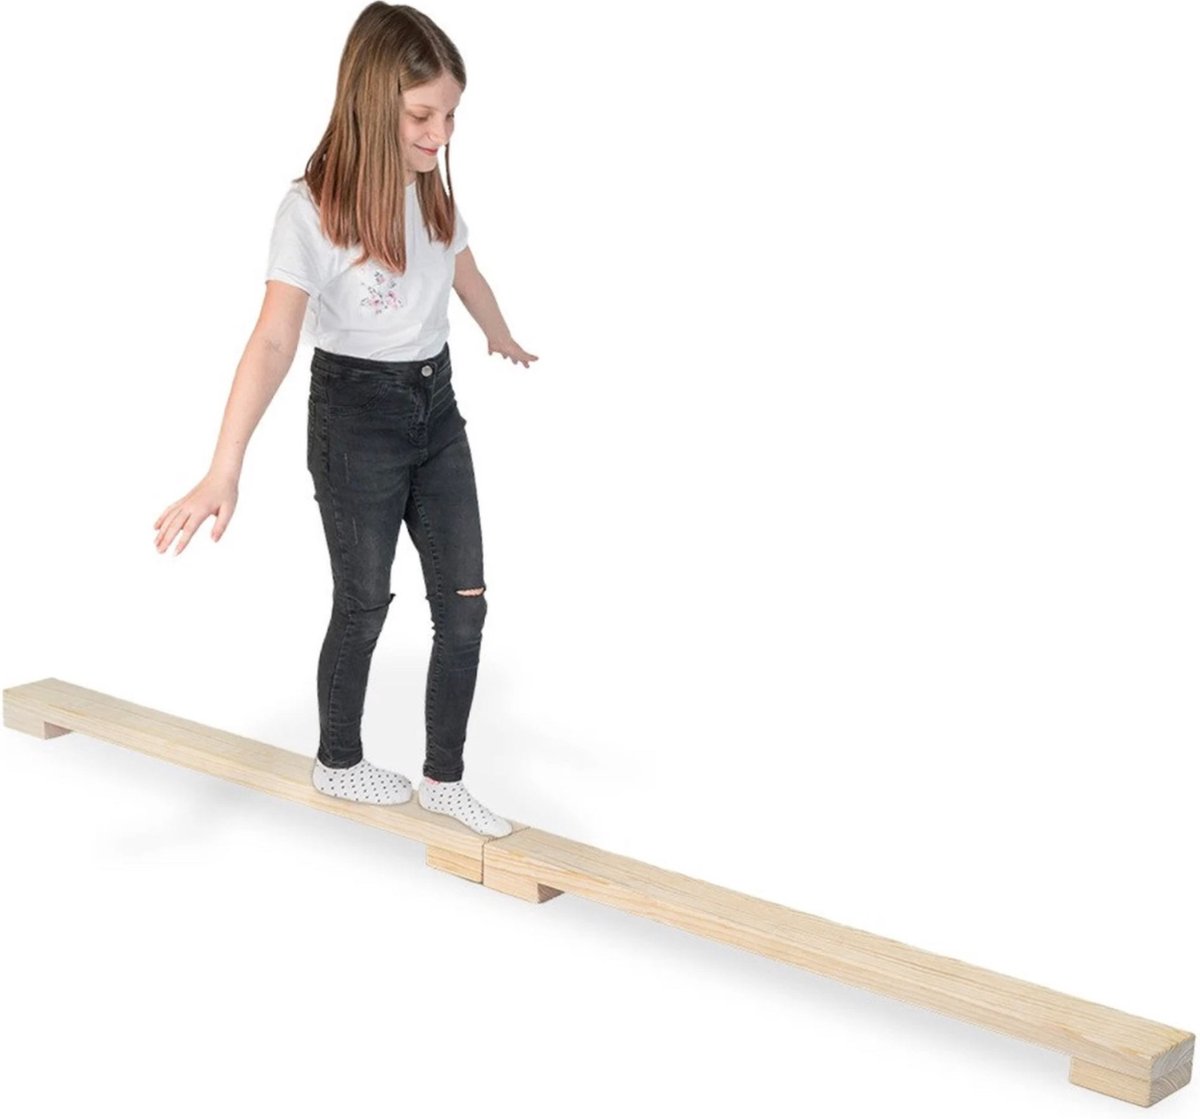 Houten Turnbalk Gratis oefenvideo`s Ideale compacte balk om thuis oefeningen op te turnen | Twee losse delen